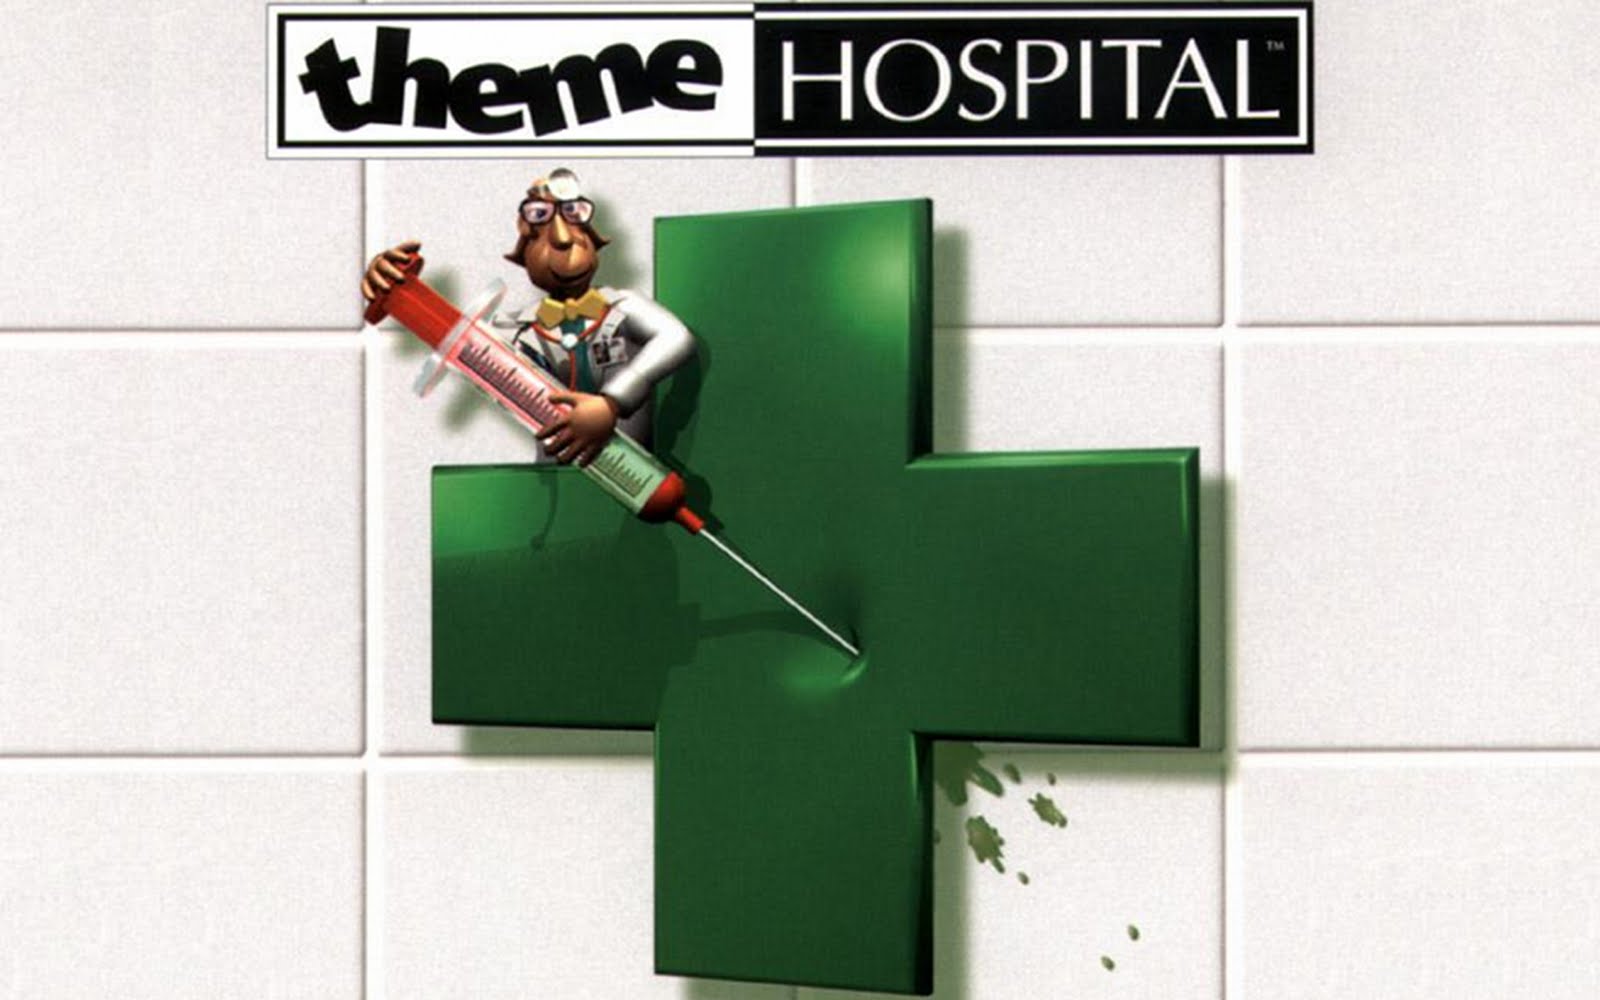 theme hospitalmac